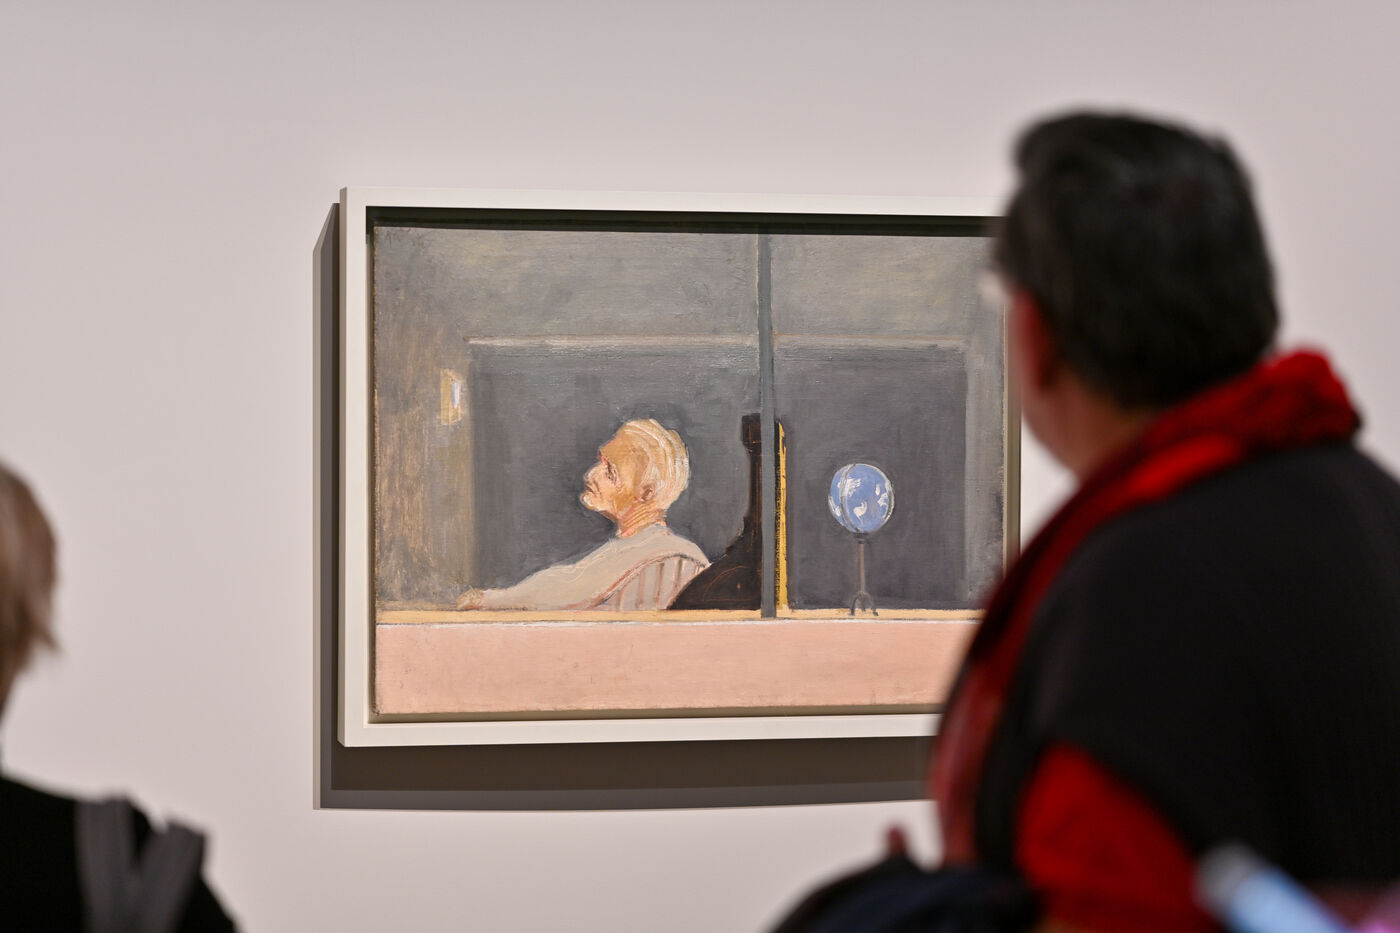 Fondation Louis Vuitton presents a retrospective for Mark Rothko